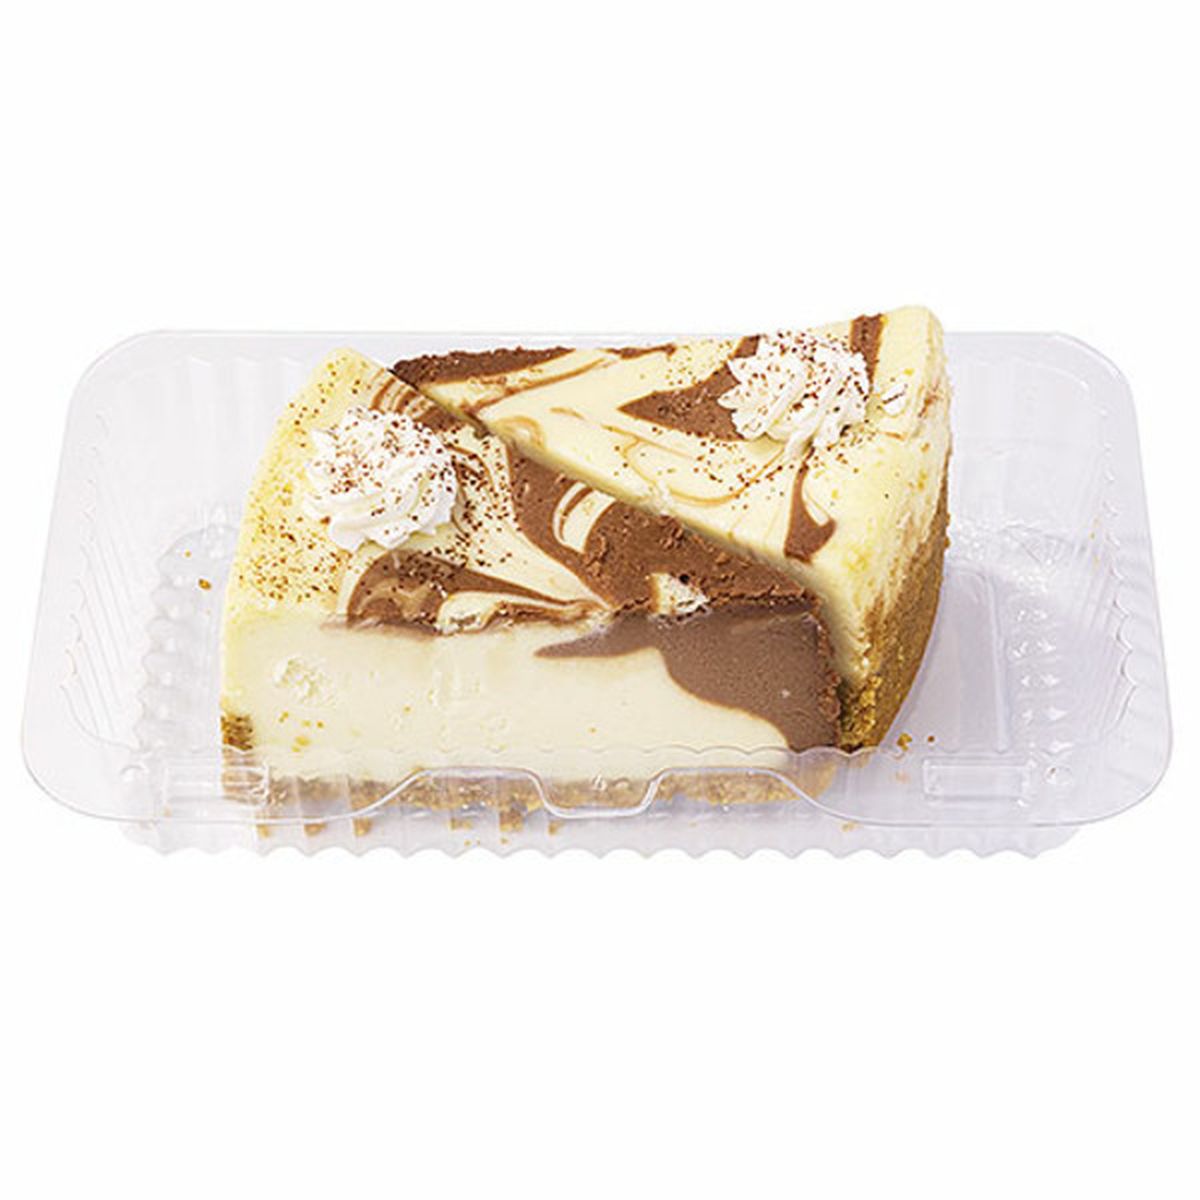 Calories in Wegmans Ultimate Marble Cheesecake Slice, 2 pack